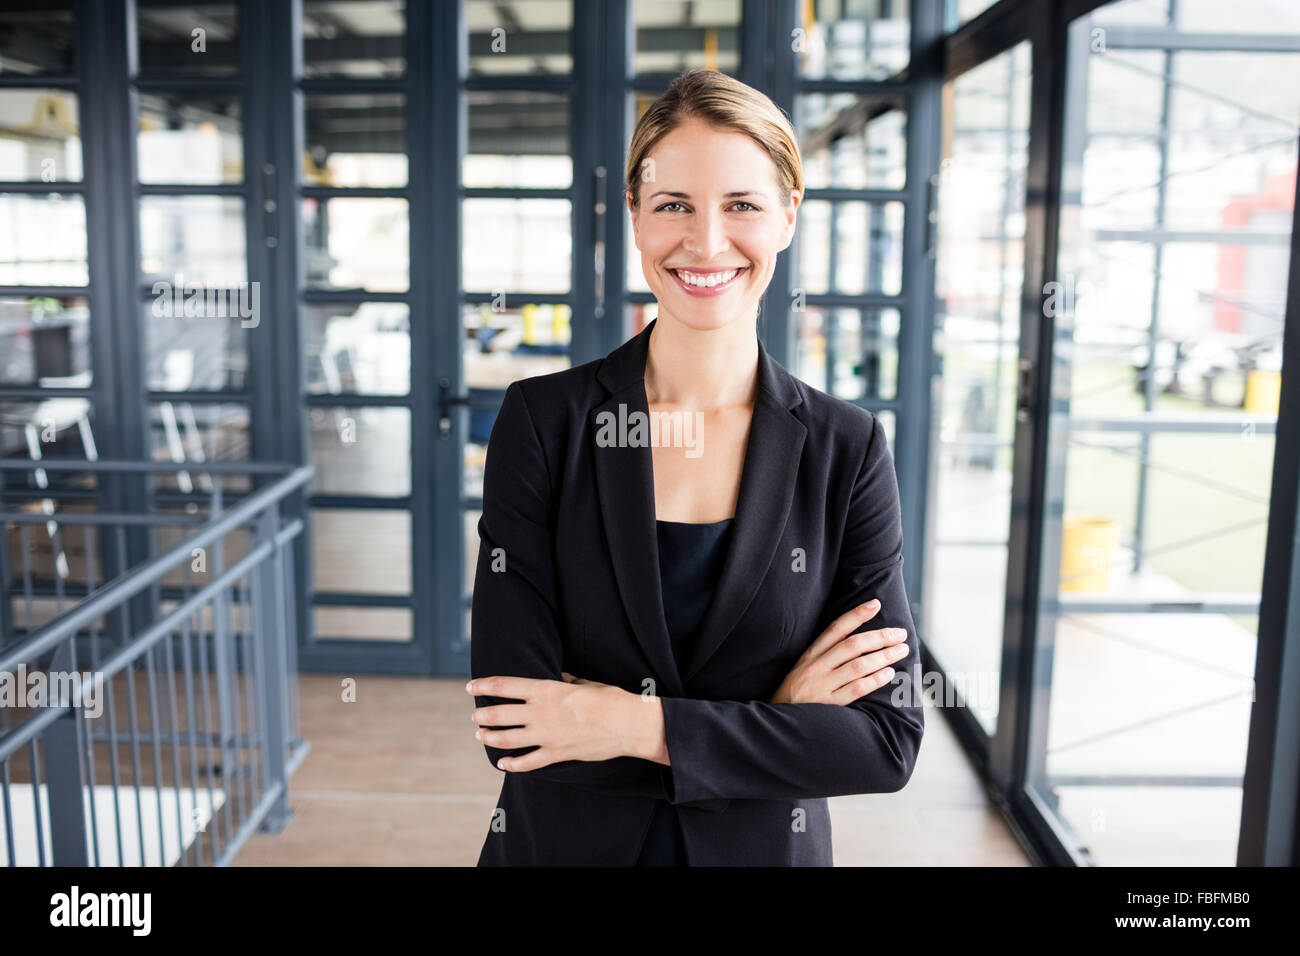 businesswoman smiling Stock Photo